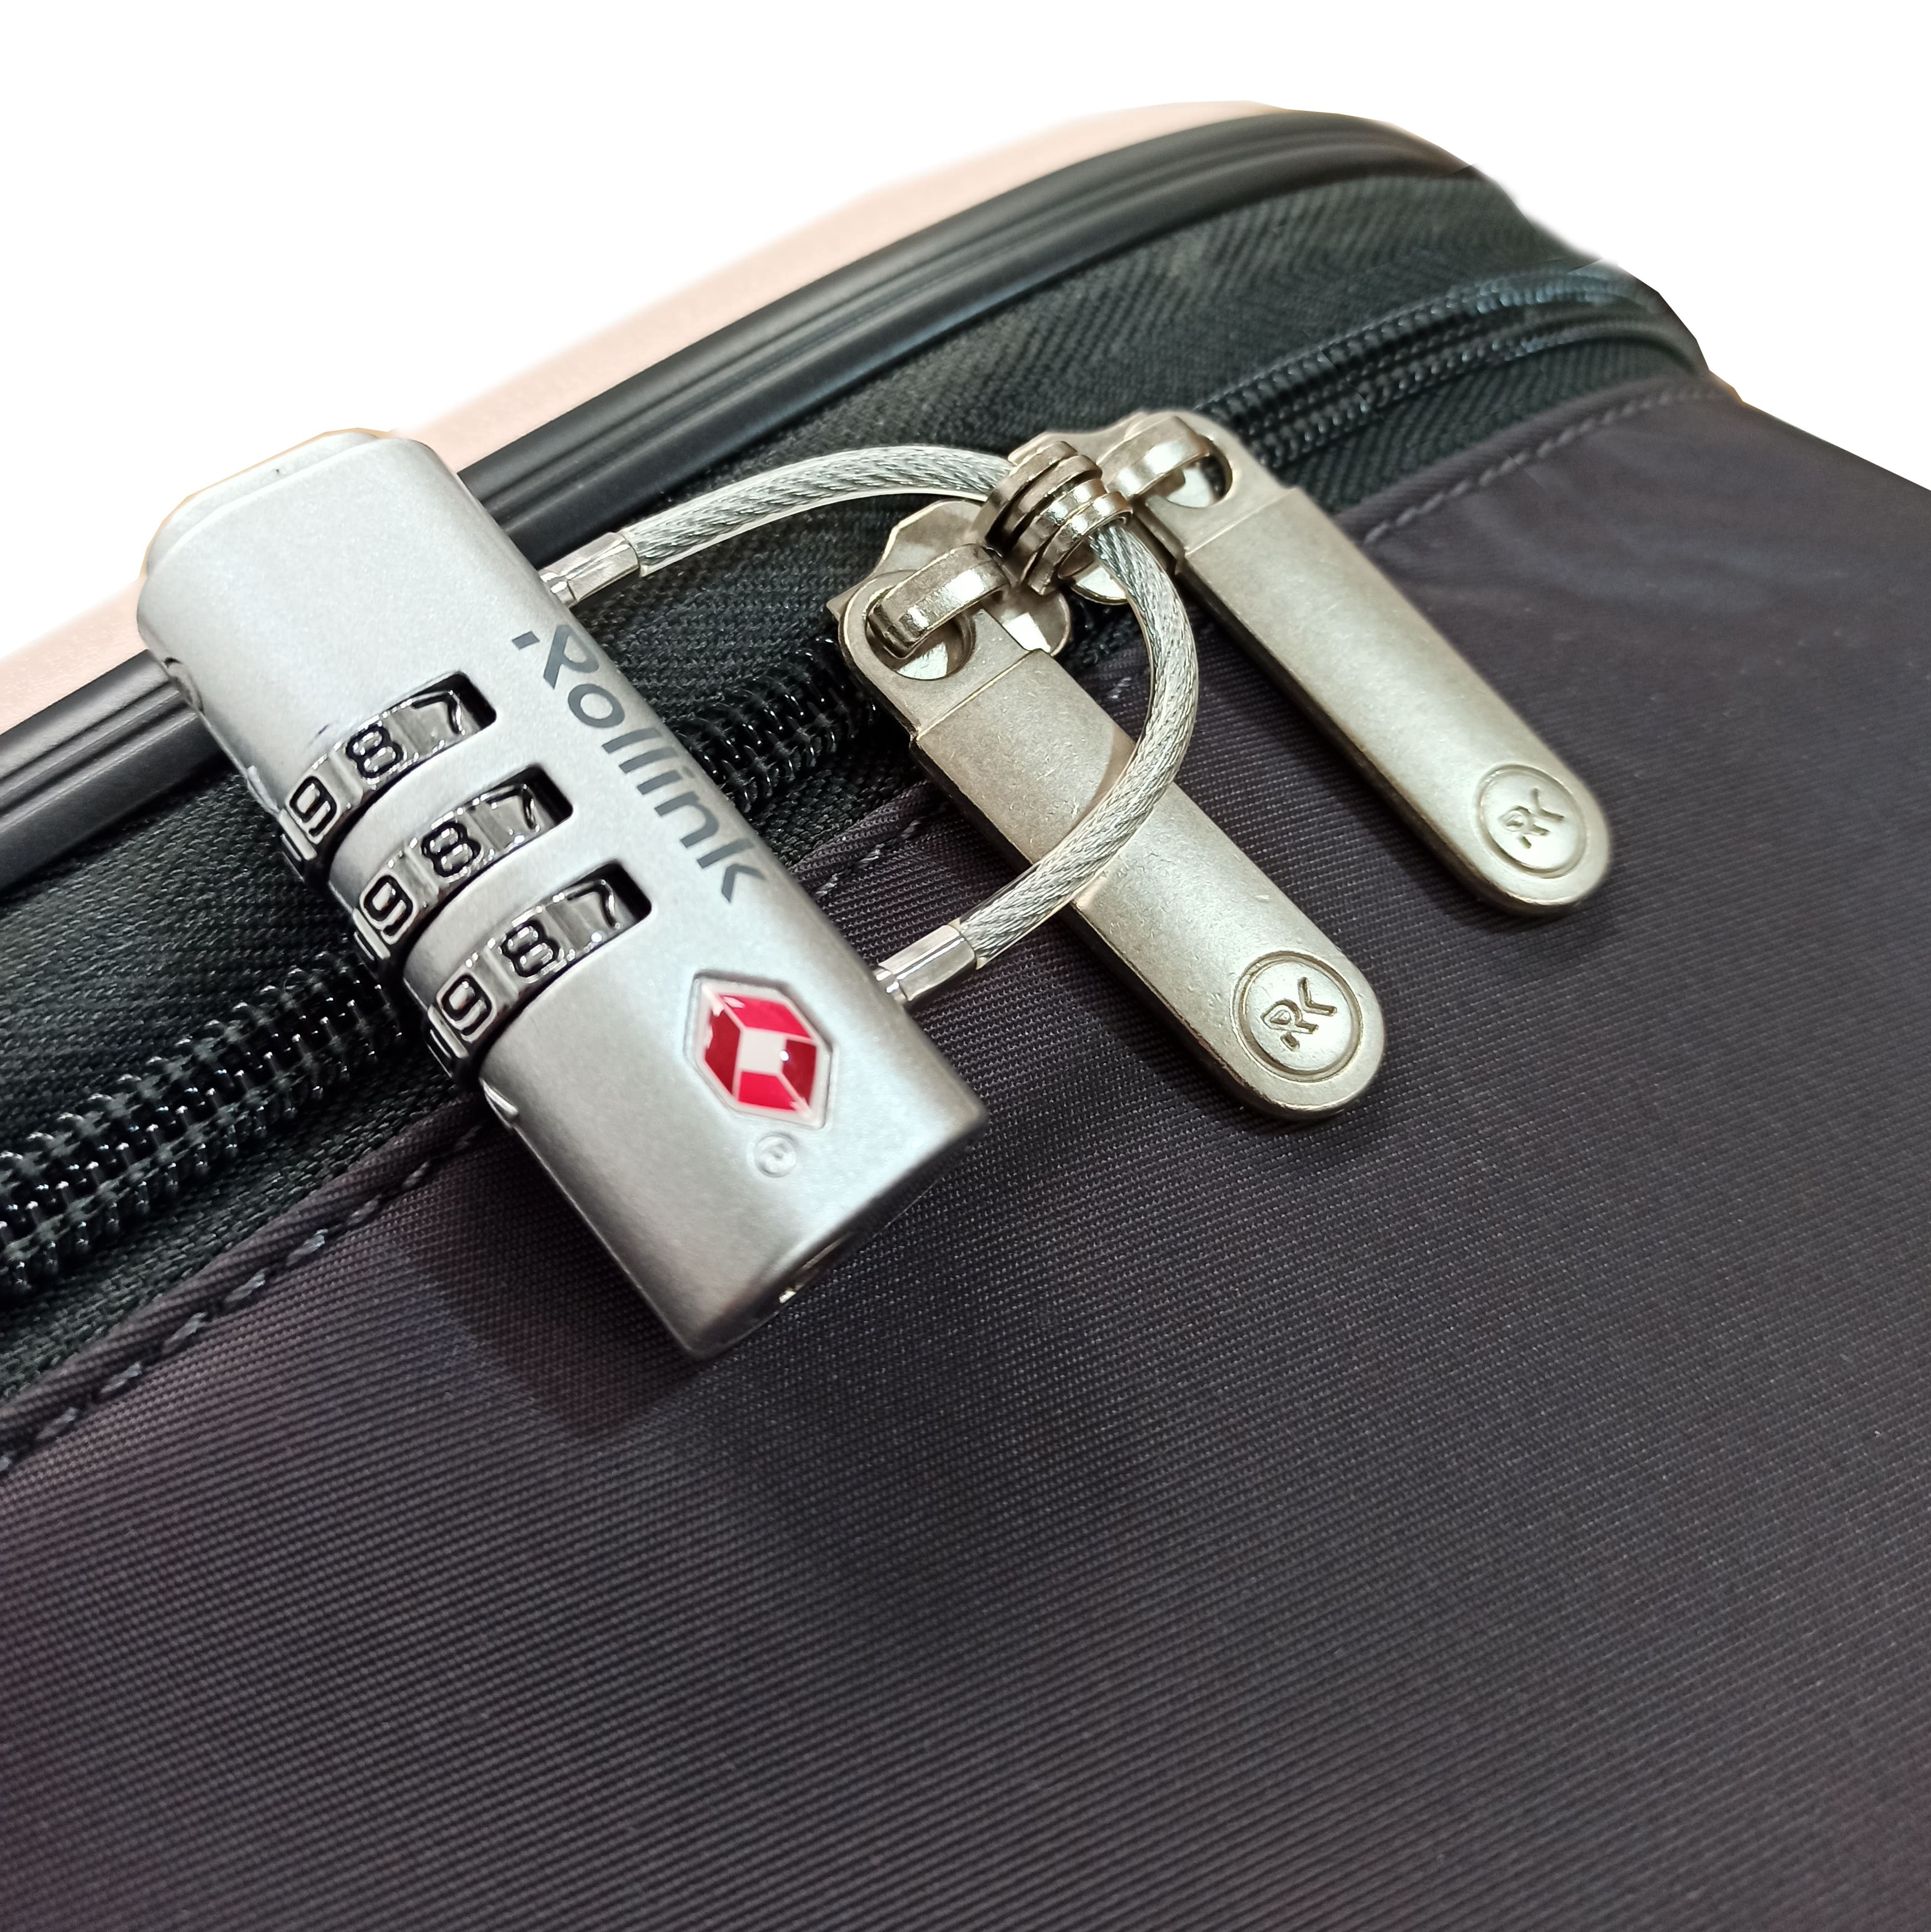 Zimtown 4 Piece Luggage Set, ABS Hard Shell Suitcase Luggage Sets Double  Wheels with TSA Lock, Rose Gold - Walmart.com